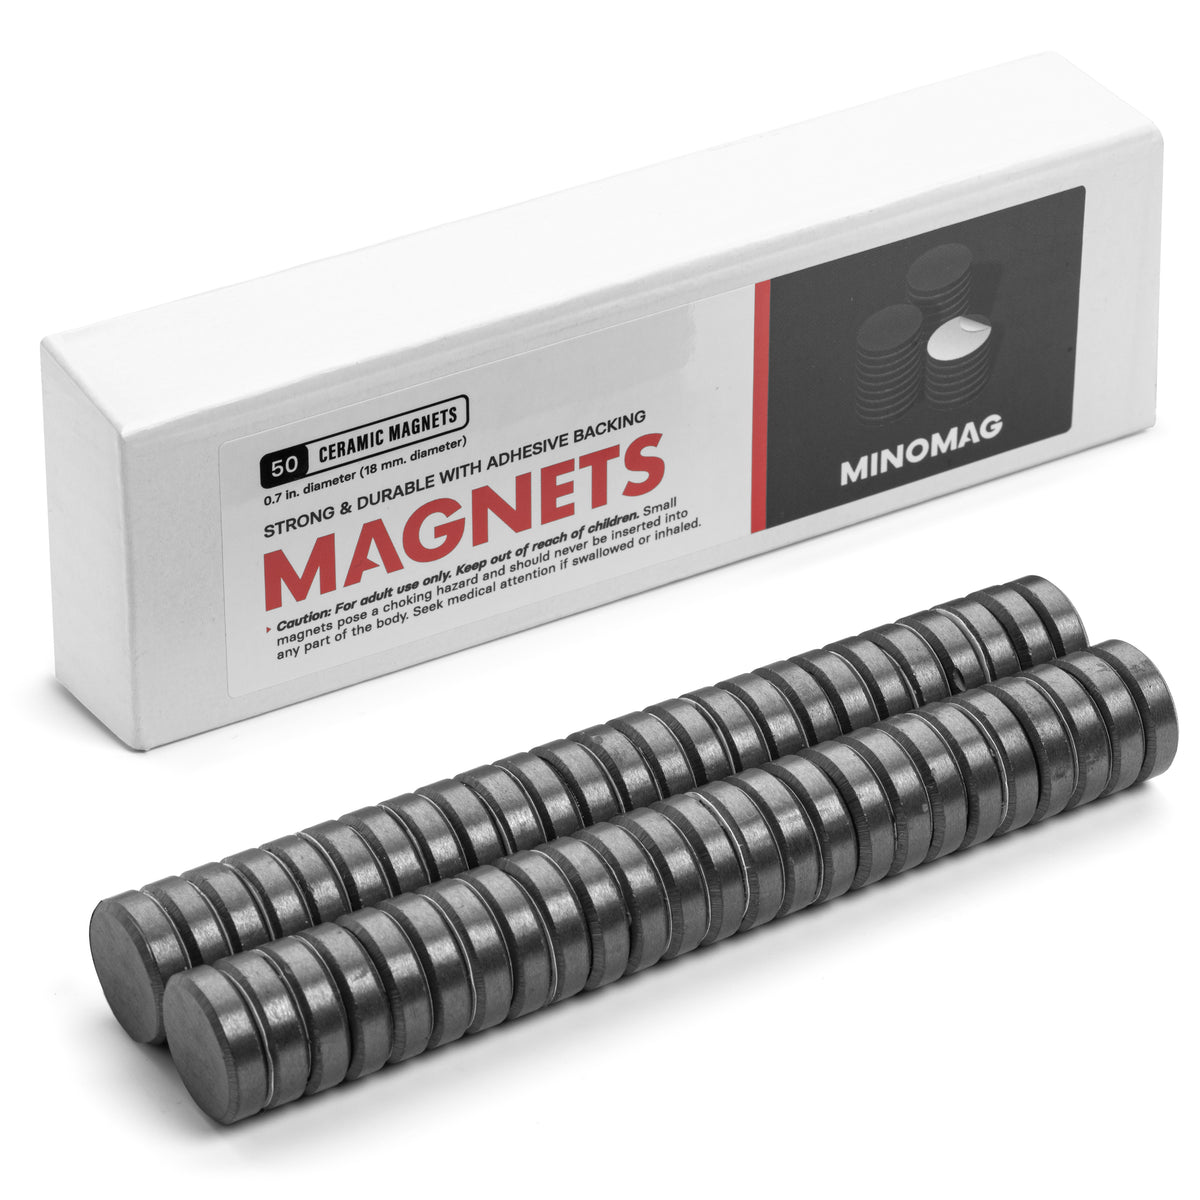 Adhesive Ceramic Magnets 50 PCs – Round Circle Magnets